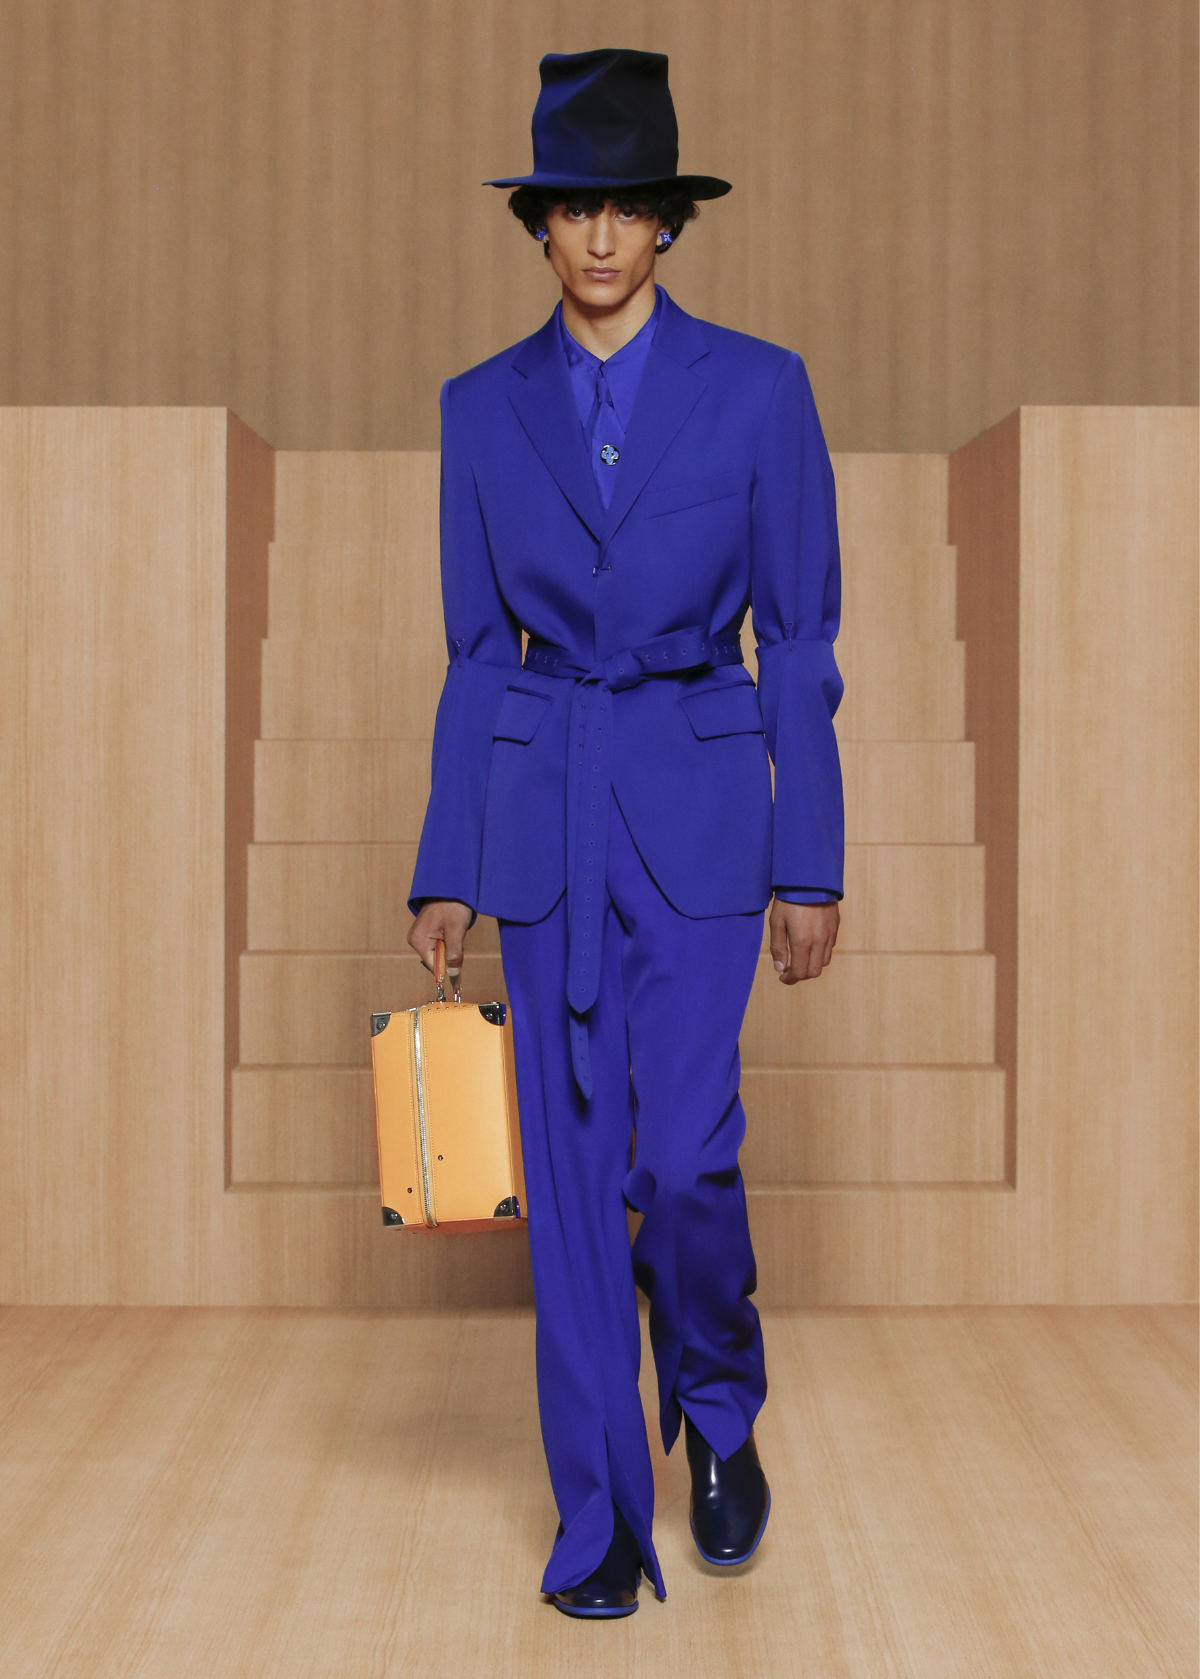 Louis Vuitton's Taïgarama Collection Gets a Vibrant Summer Update